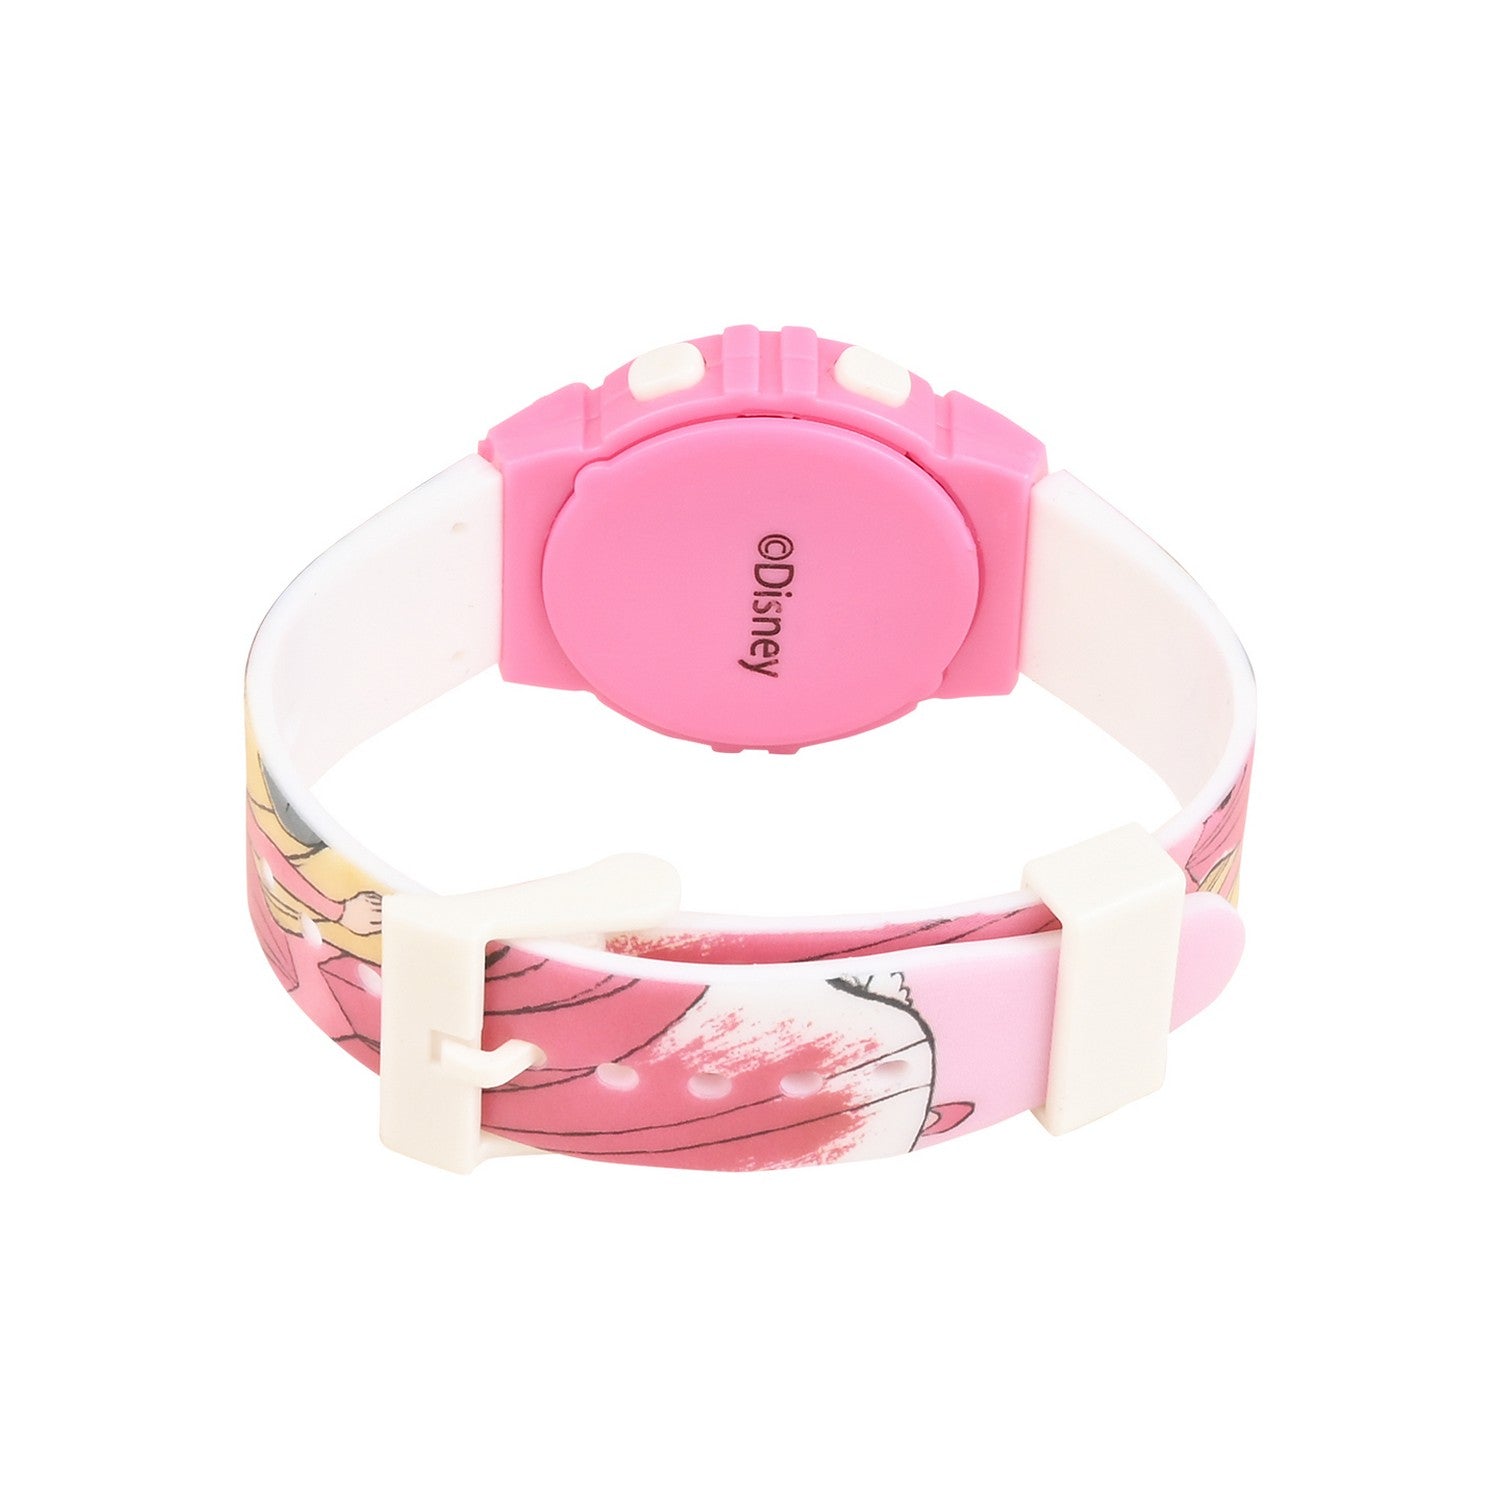 Disney  Princess  Basic Digital Watches